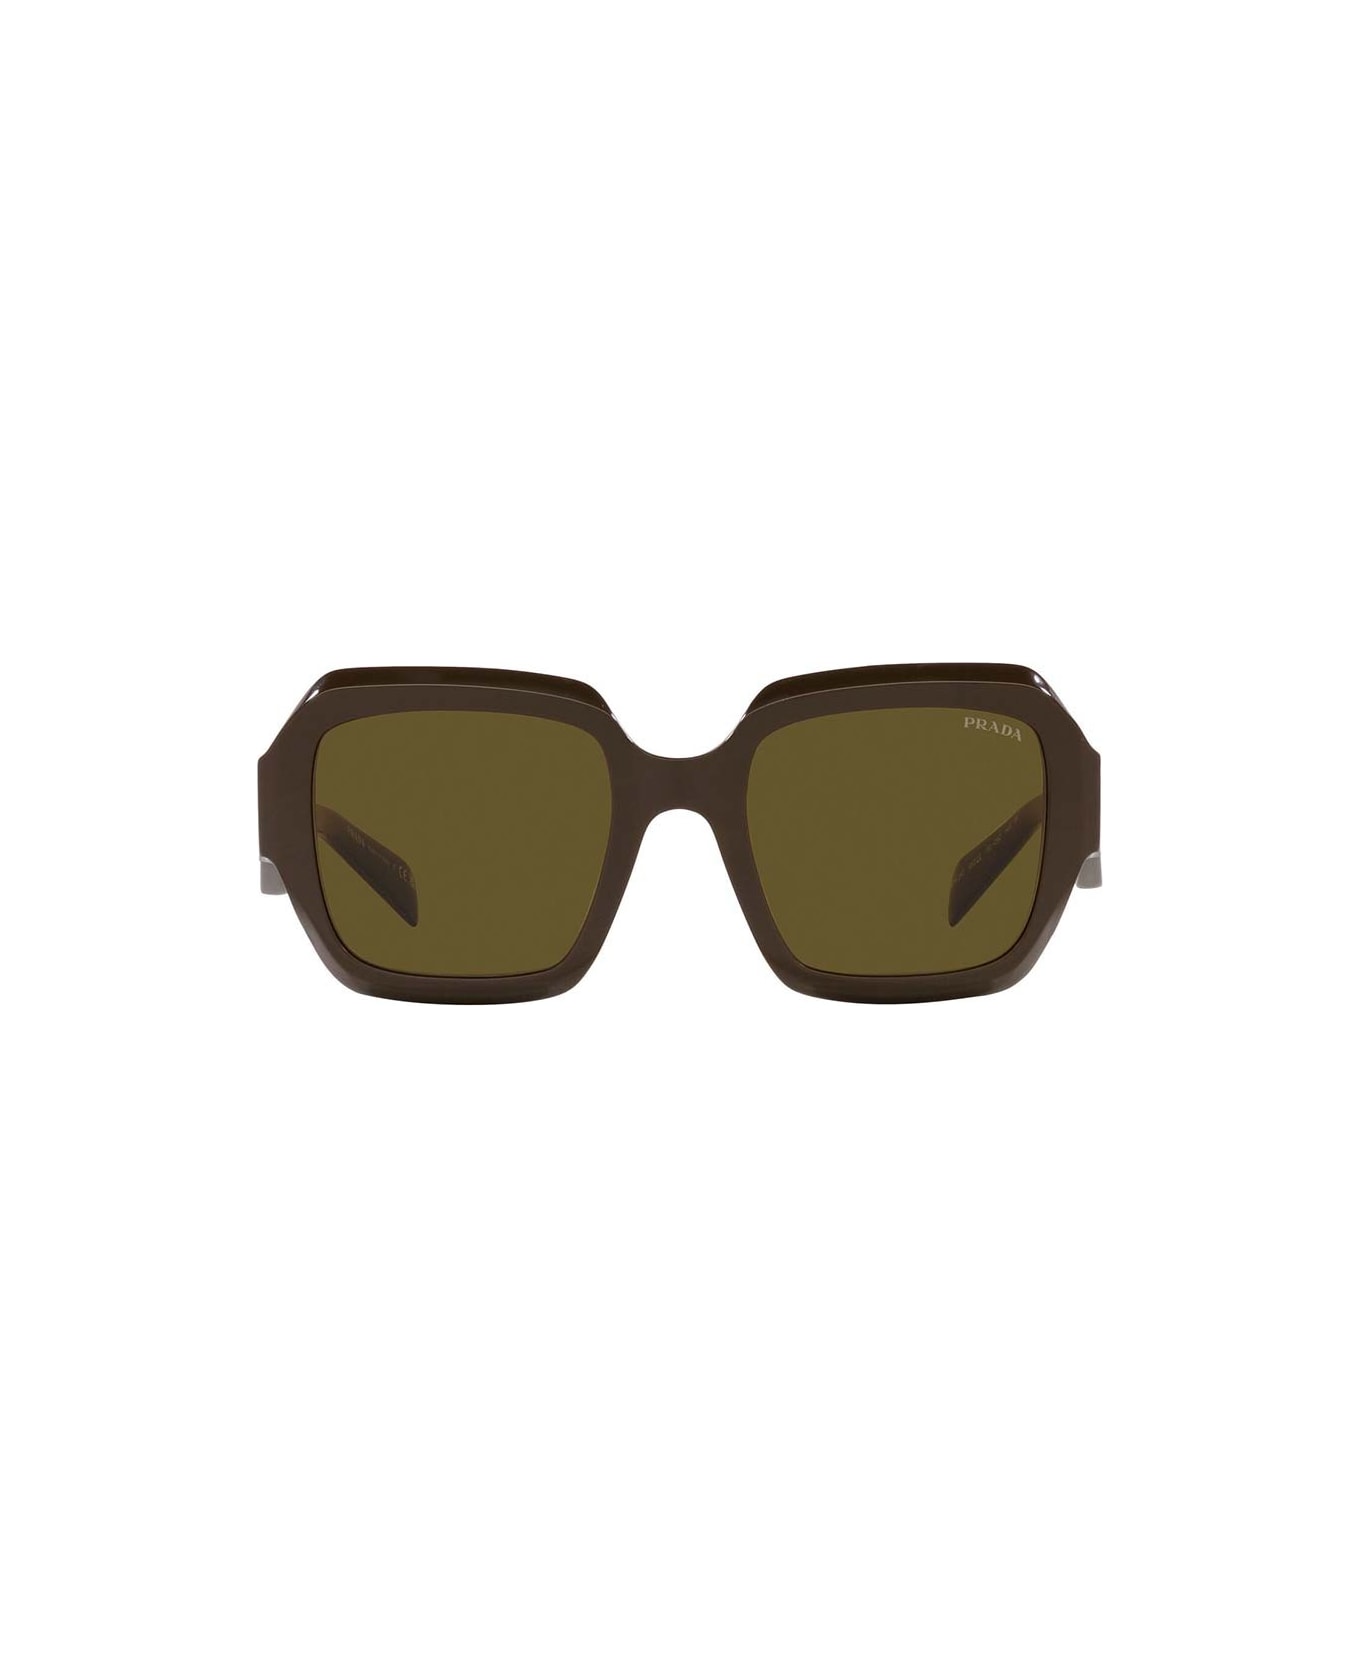 Prada Eyewear Sunglasses - 15L09Z